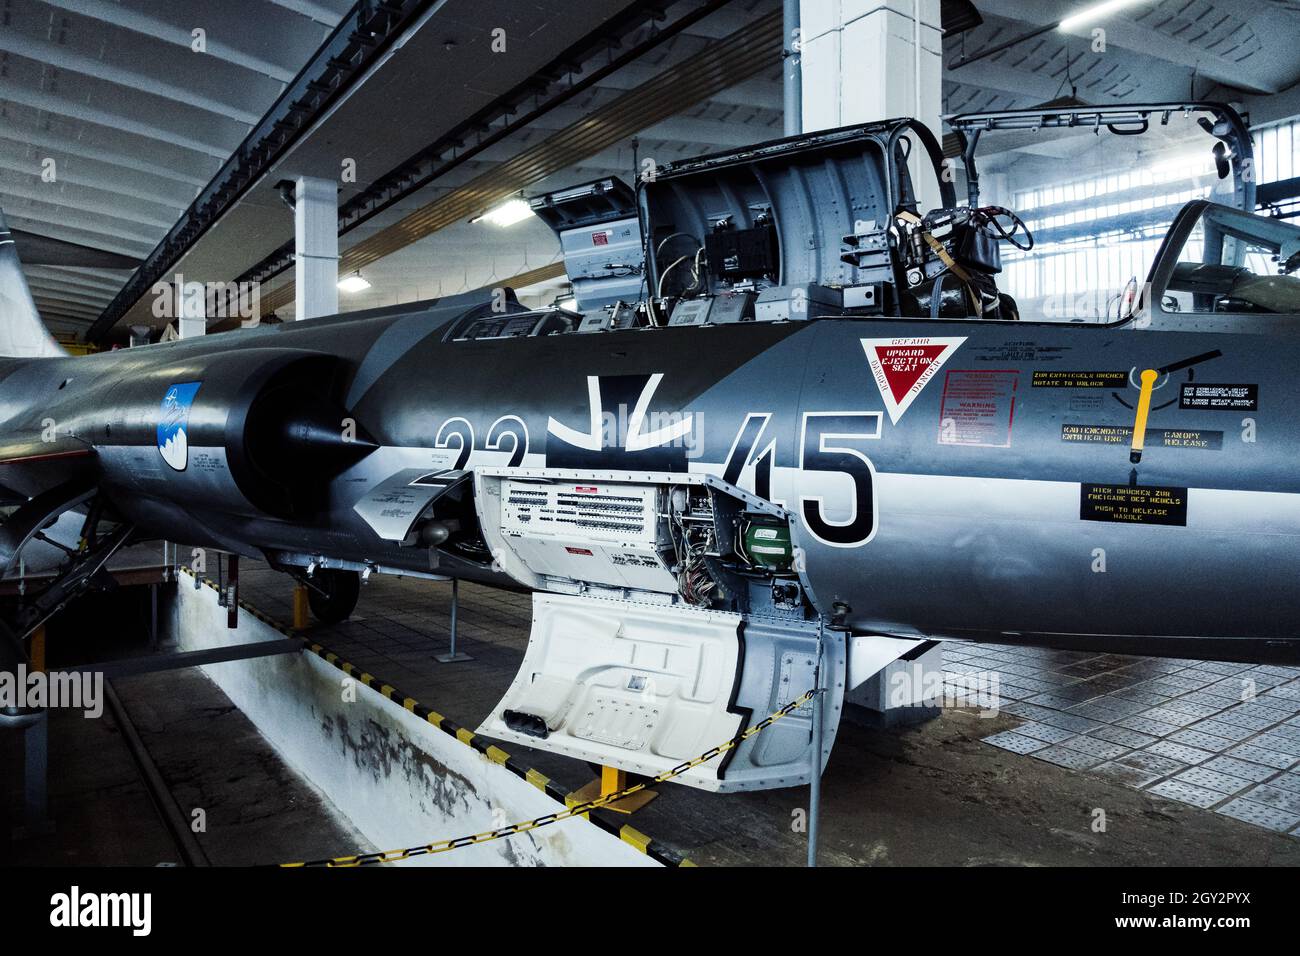 WERNIGERODE, GERMANIA - 12 settembre 2021: Il Luftfahrtmuseum Luftfahrt Flugzeug Museum Wernigerode Militaer Bomber Jet Bundeswehr Foto Stock